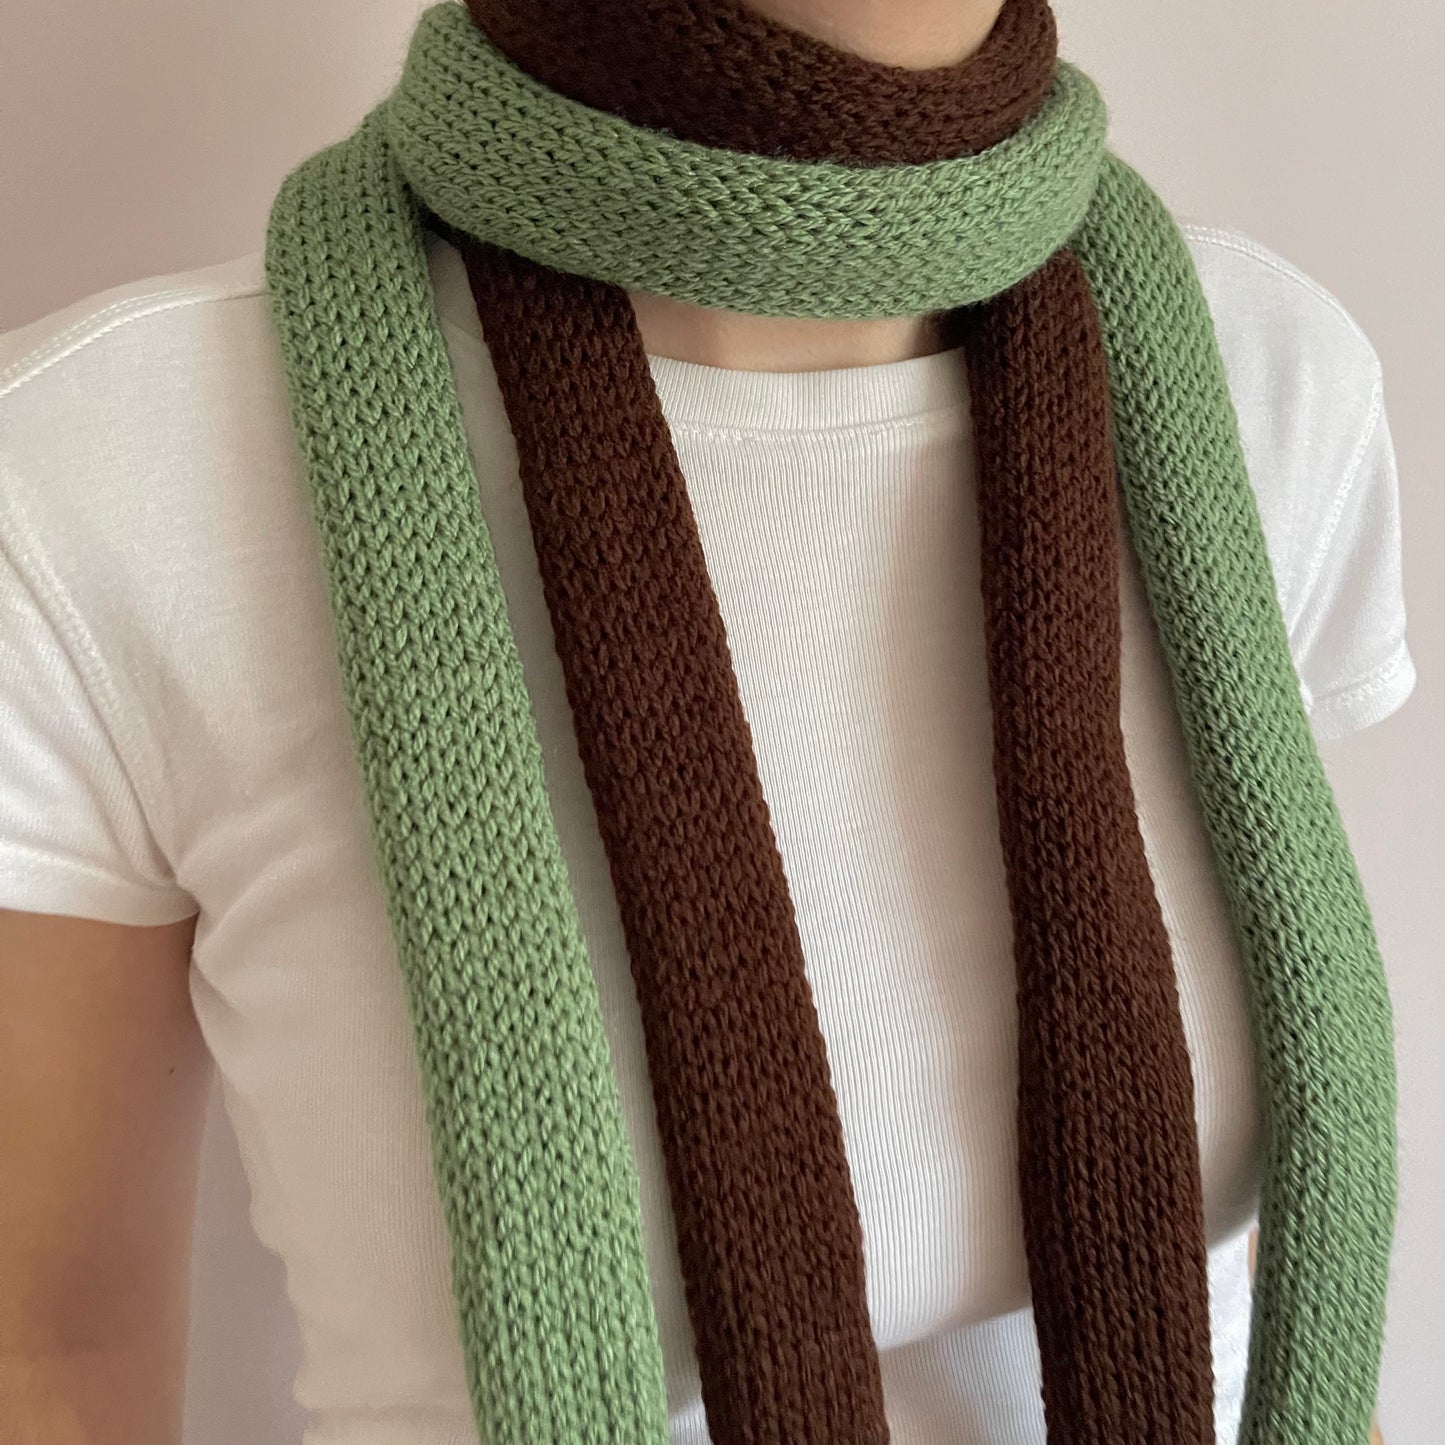 Handmade knitted skinny scarf in brown